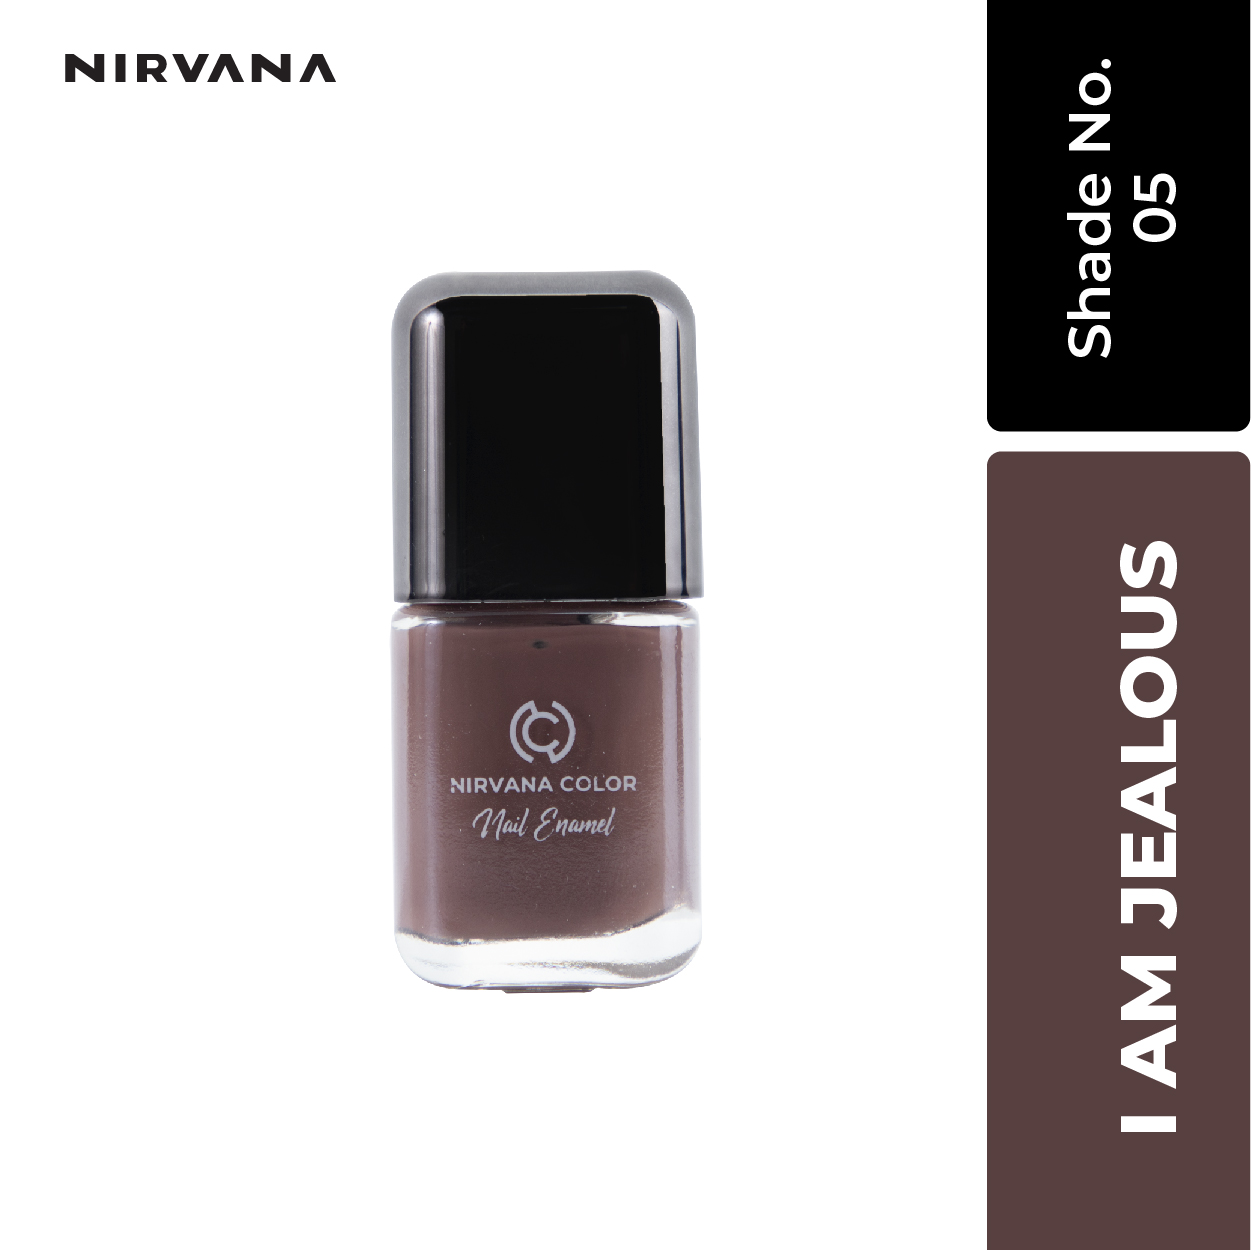 Nirvana Color Nail Enamel – I Am Jealous